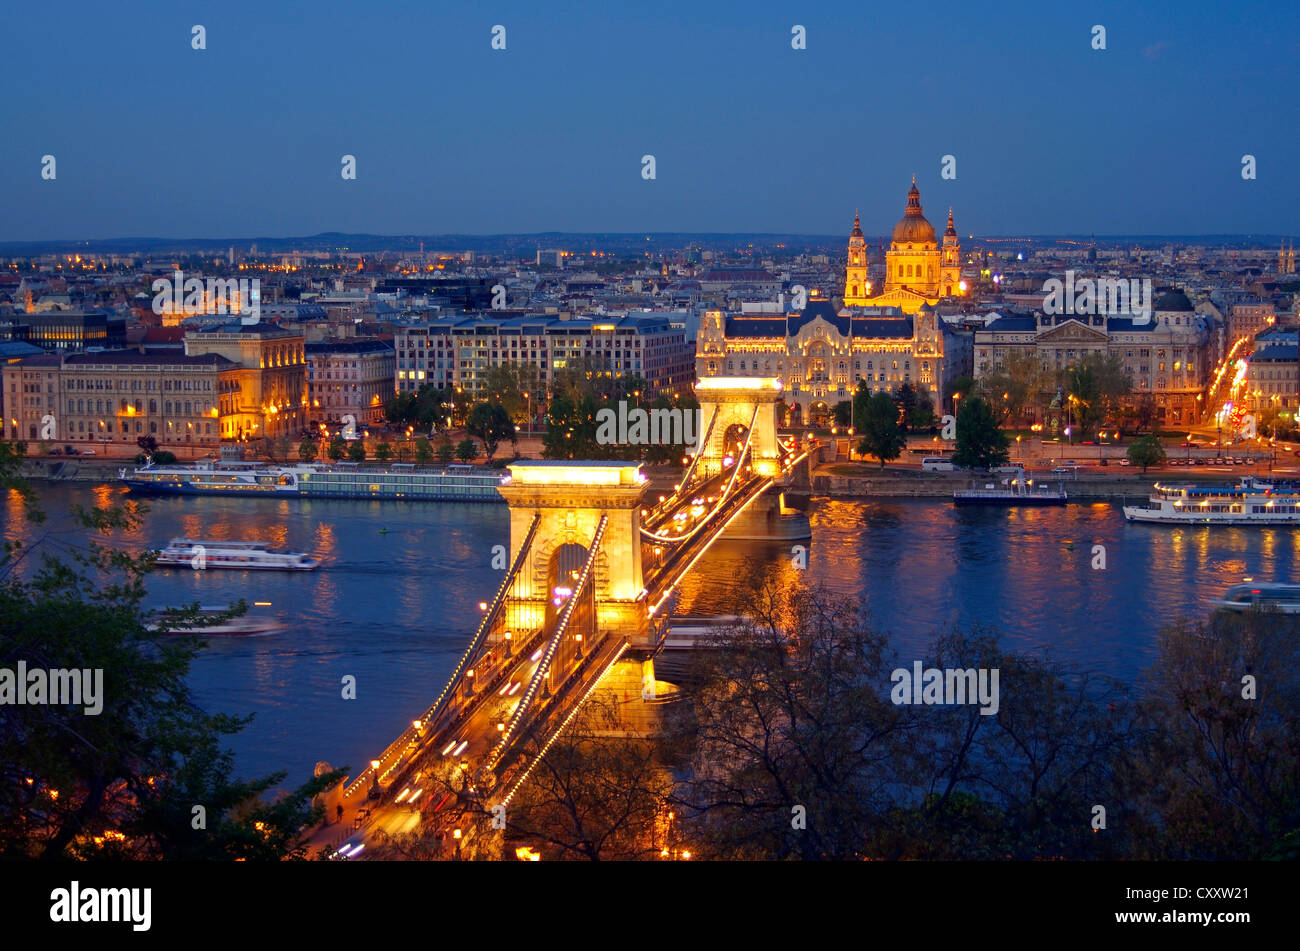 View of Budapest with the Danube at night, chain bridge, Gresham Palace, St. Stephen's Basilica, Budapest, Hungary, Europe Stock Photo